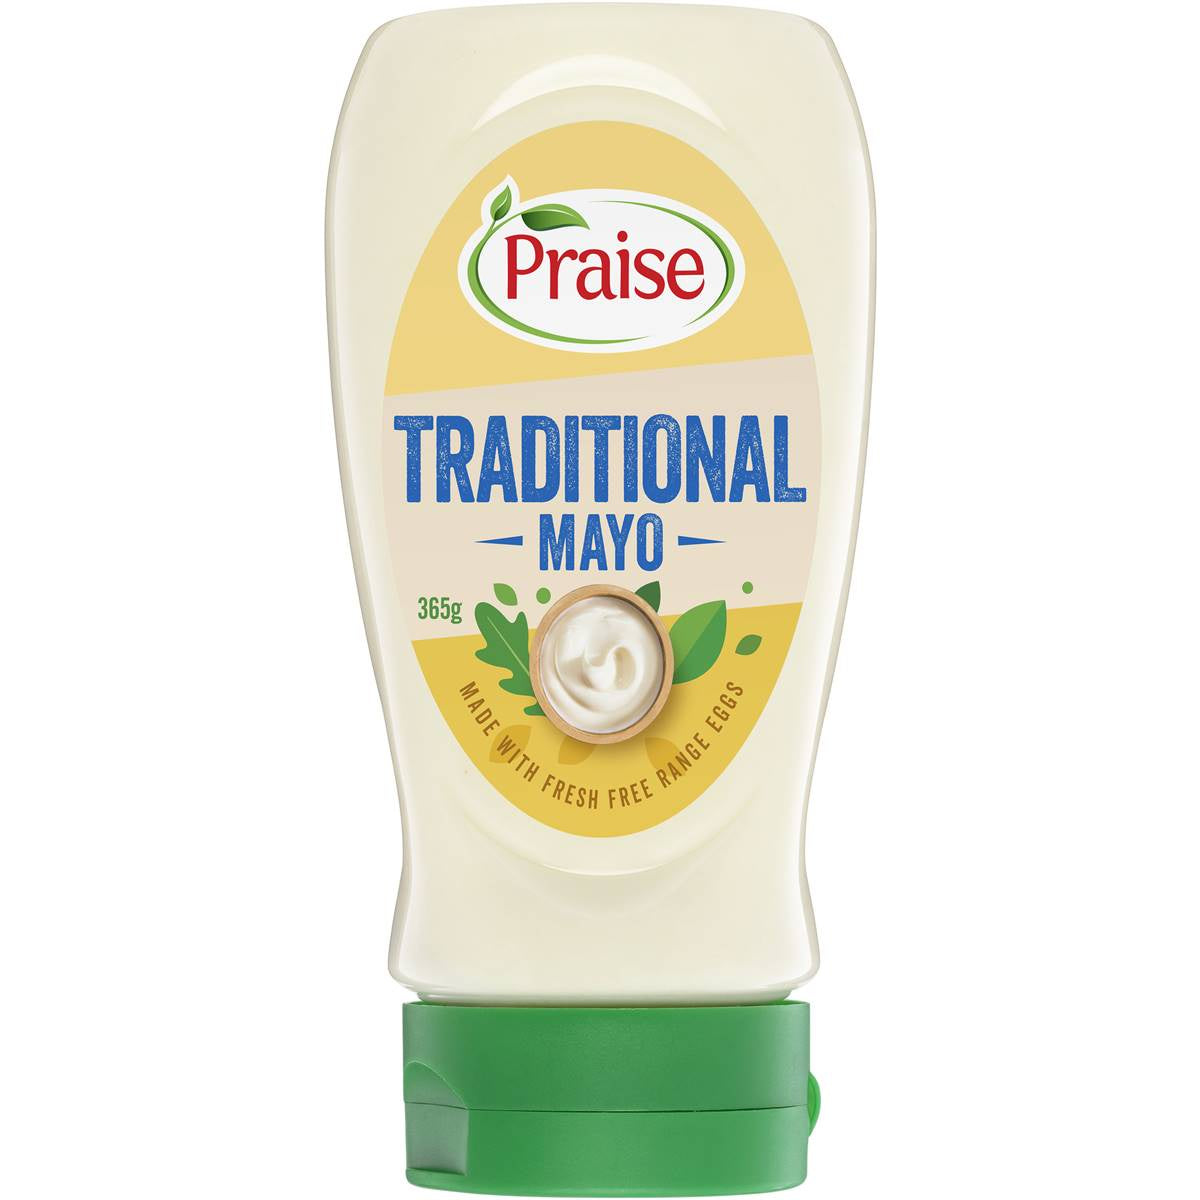 Praise Mayonnaise Traditional 365g **